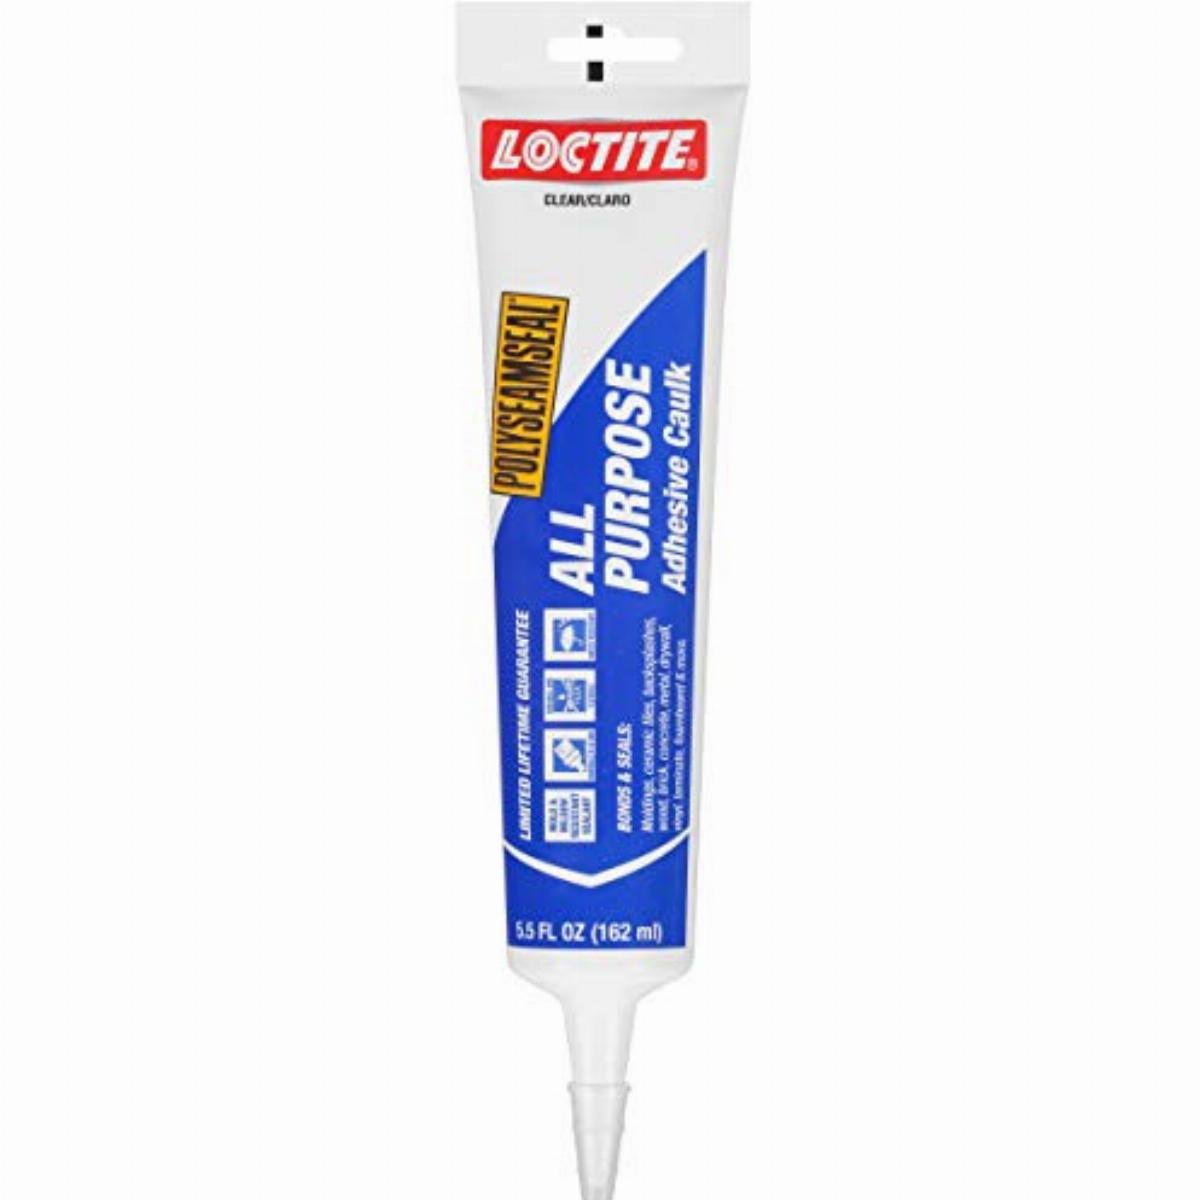 Loctite 2 In 1 All Purpose Adhesive - White, 162ml